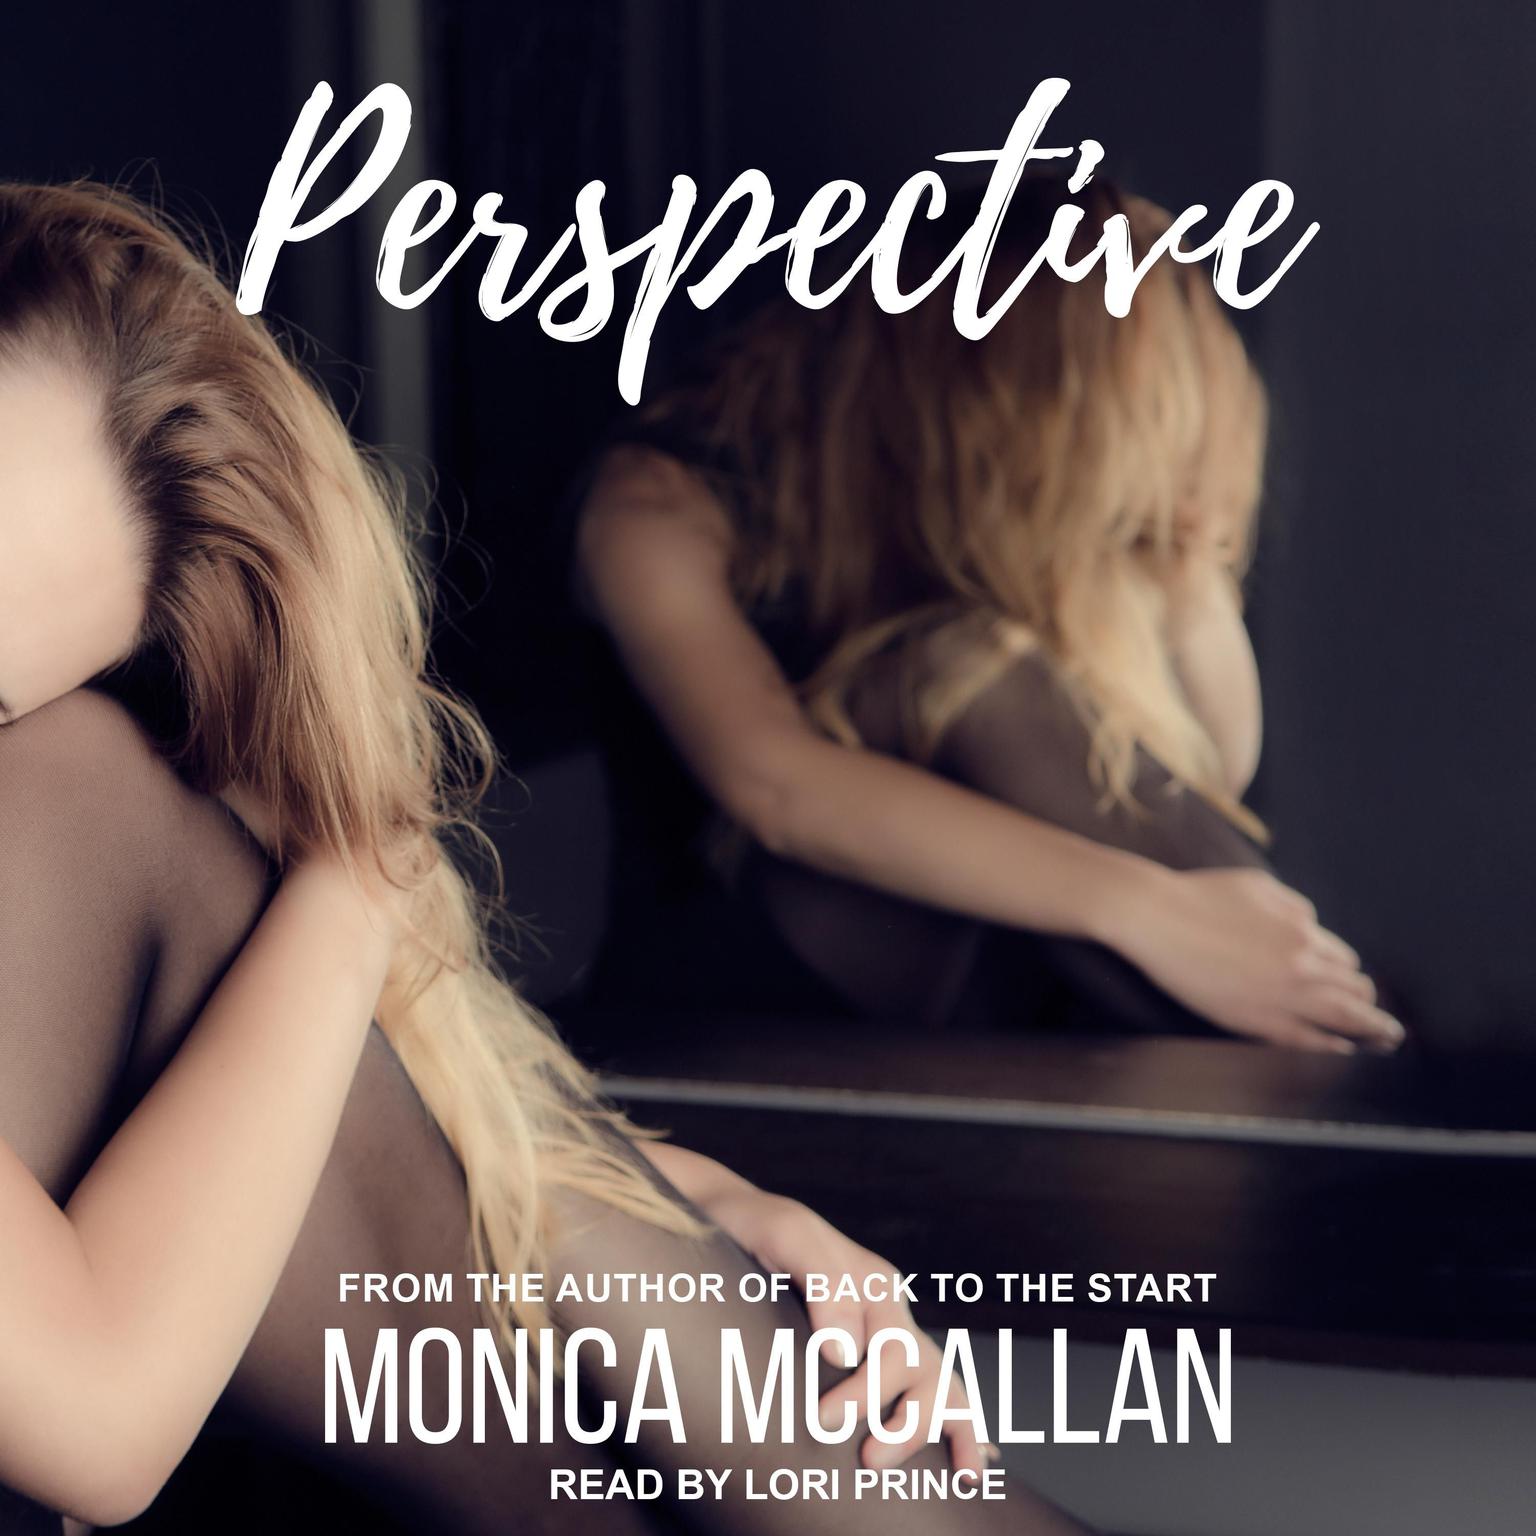 Monica McCallan, Lori Prince: Perspective (AudiobookFormat, 2019, self)